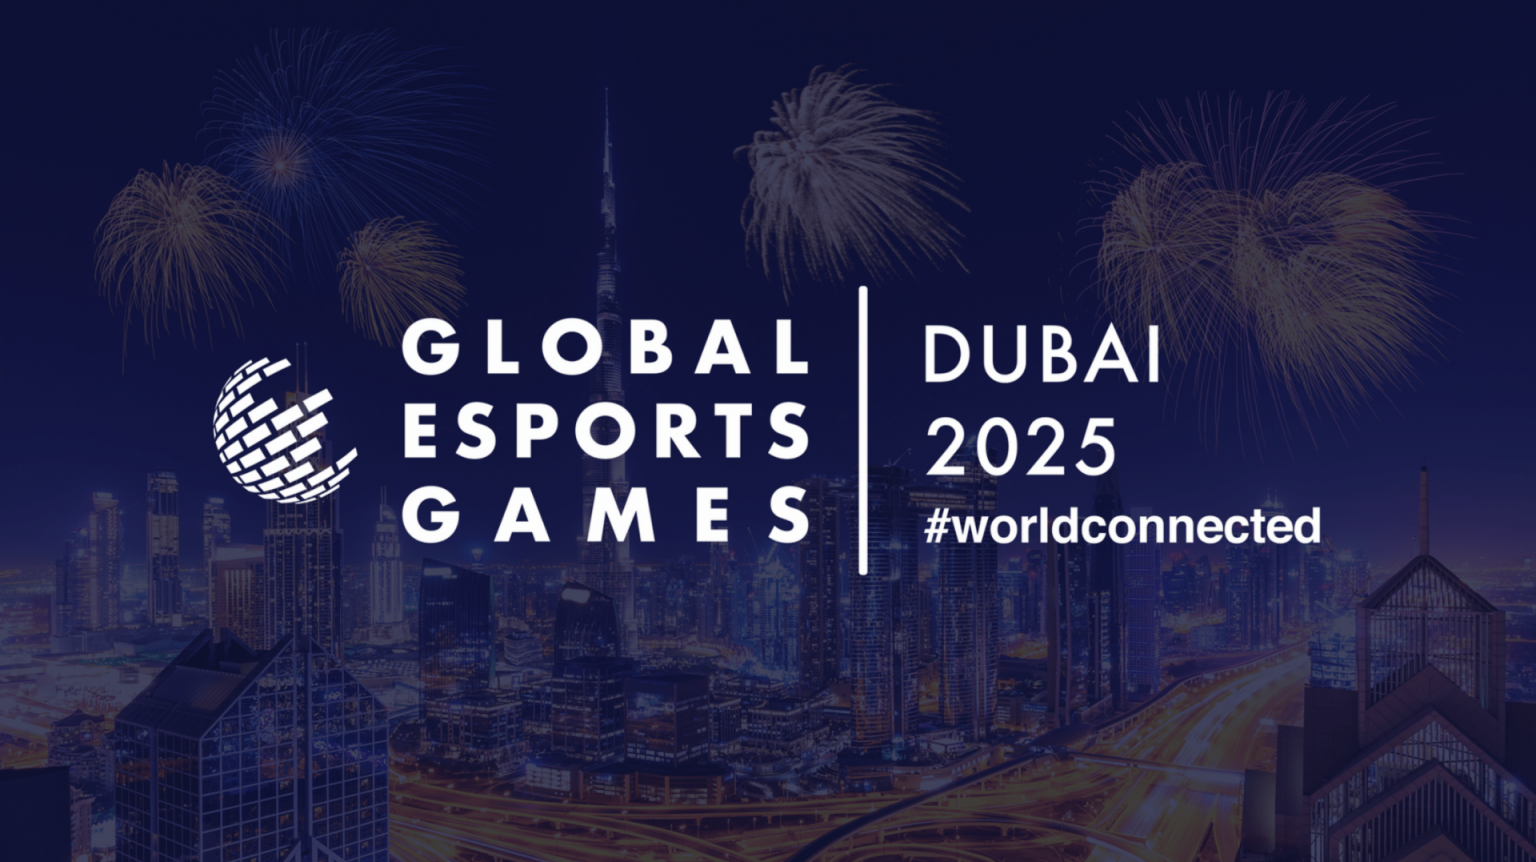 Dubai announced as host city for 2025 Global Esports Games Esports